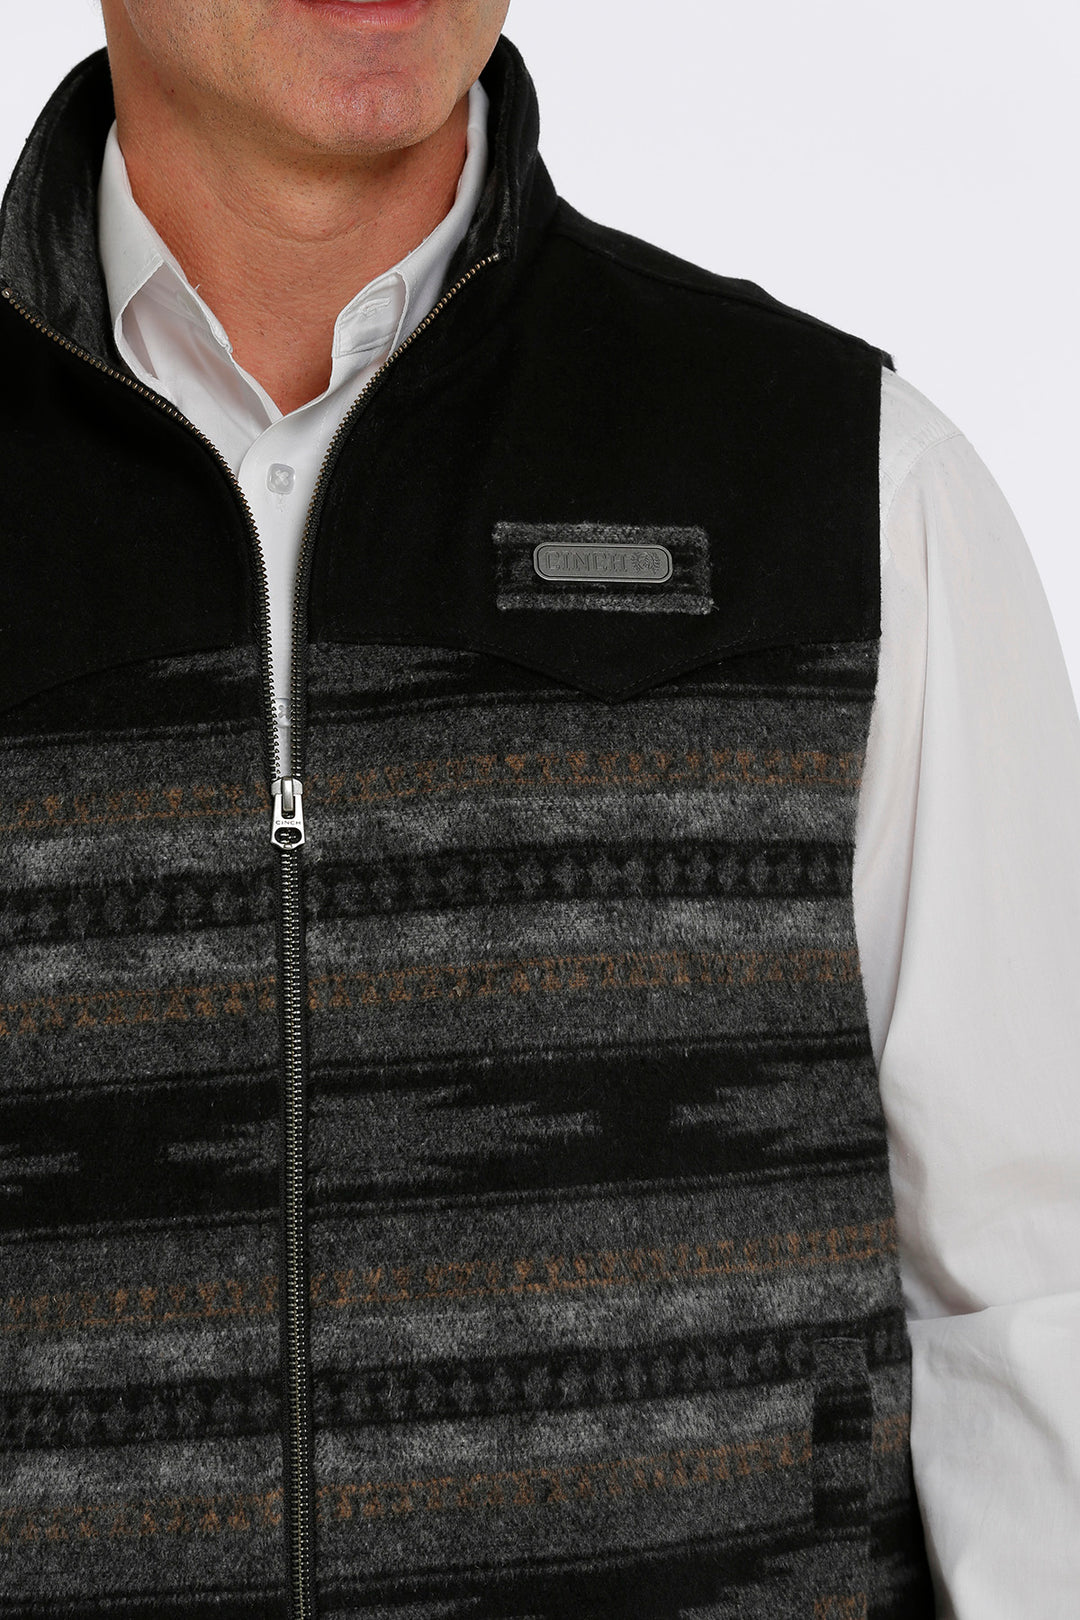 close upCinch | Blanket Stripe Poly Wool Concealed Carry Vest